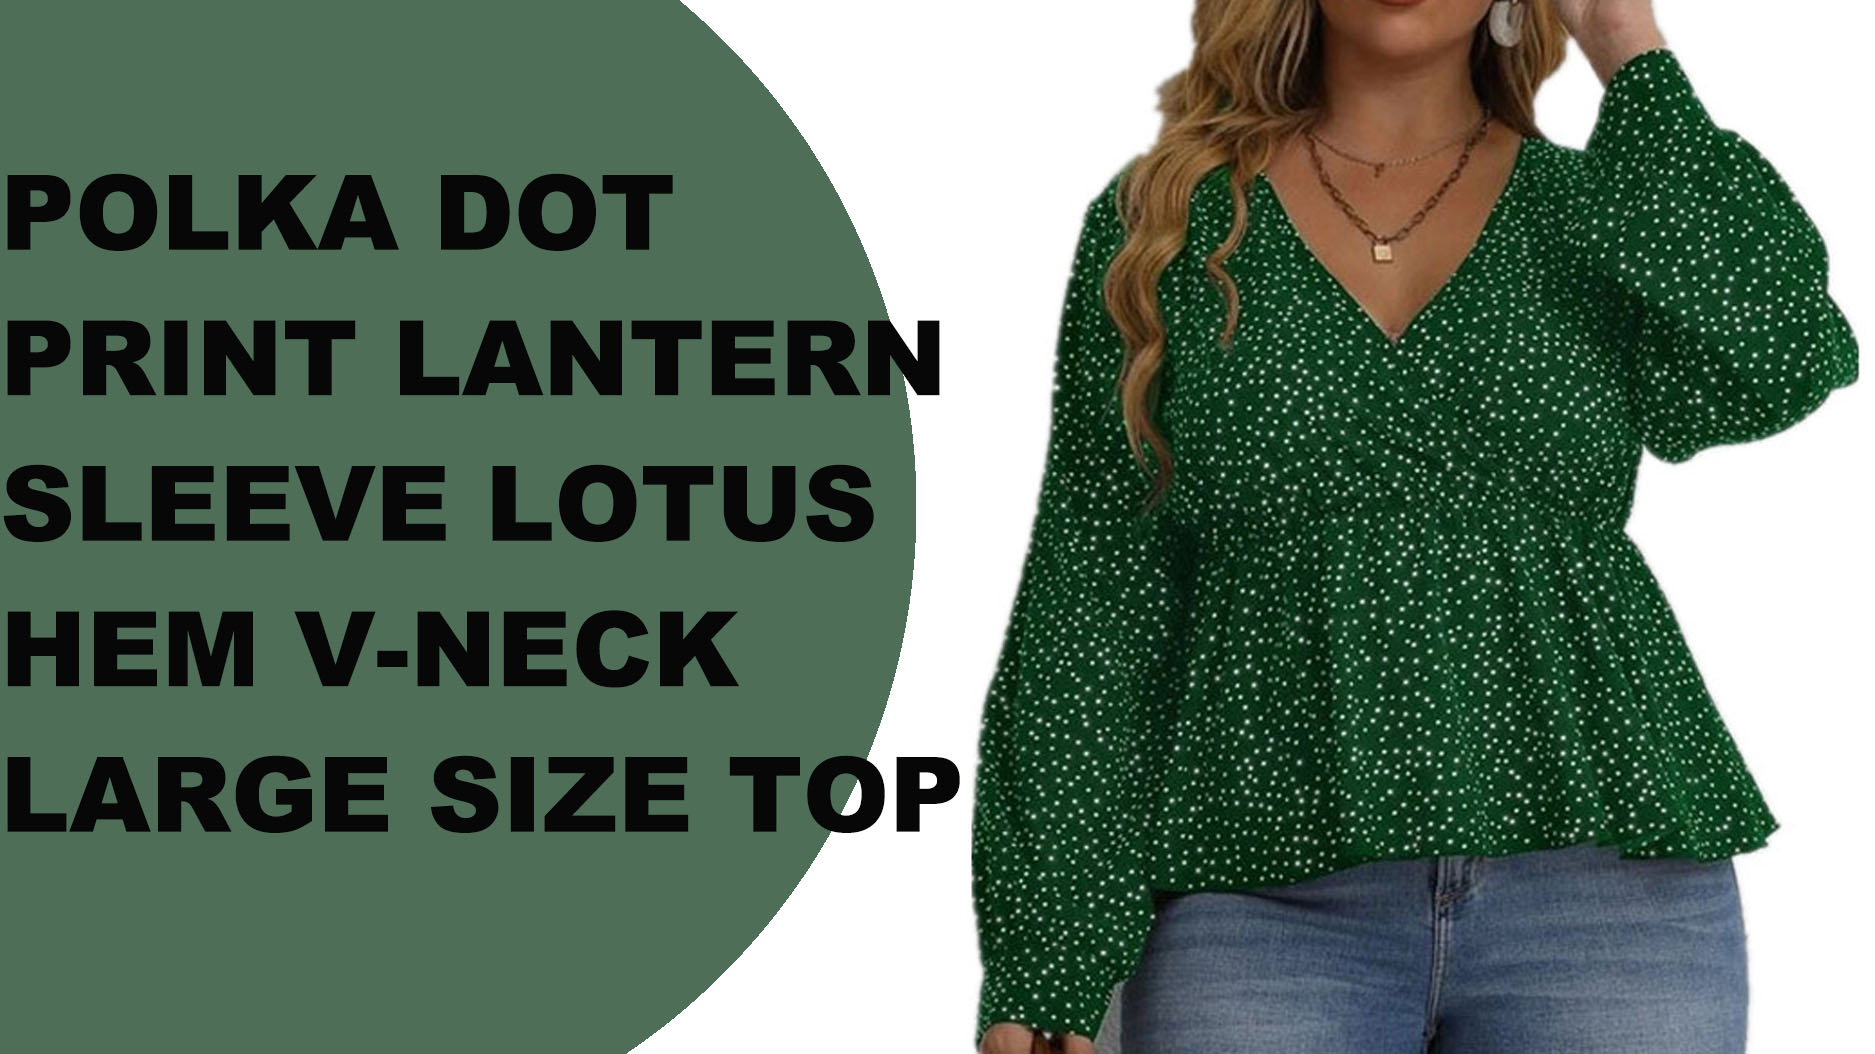 AUSCHALINK- Polka dot print Lantern sleeve Lotus hem V-neck large size top